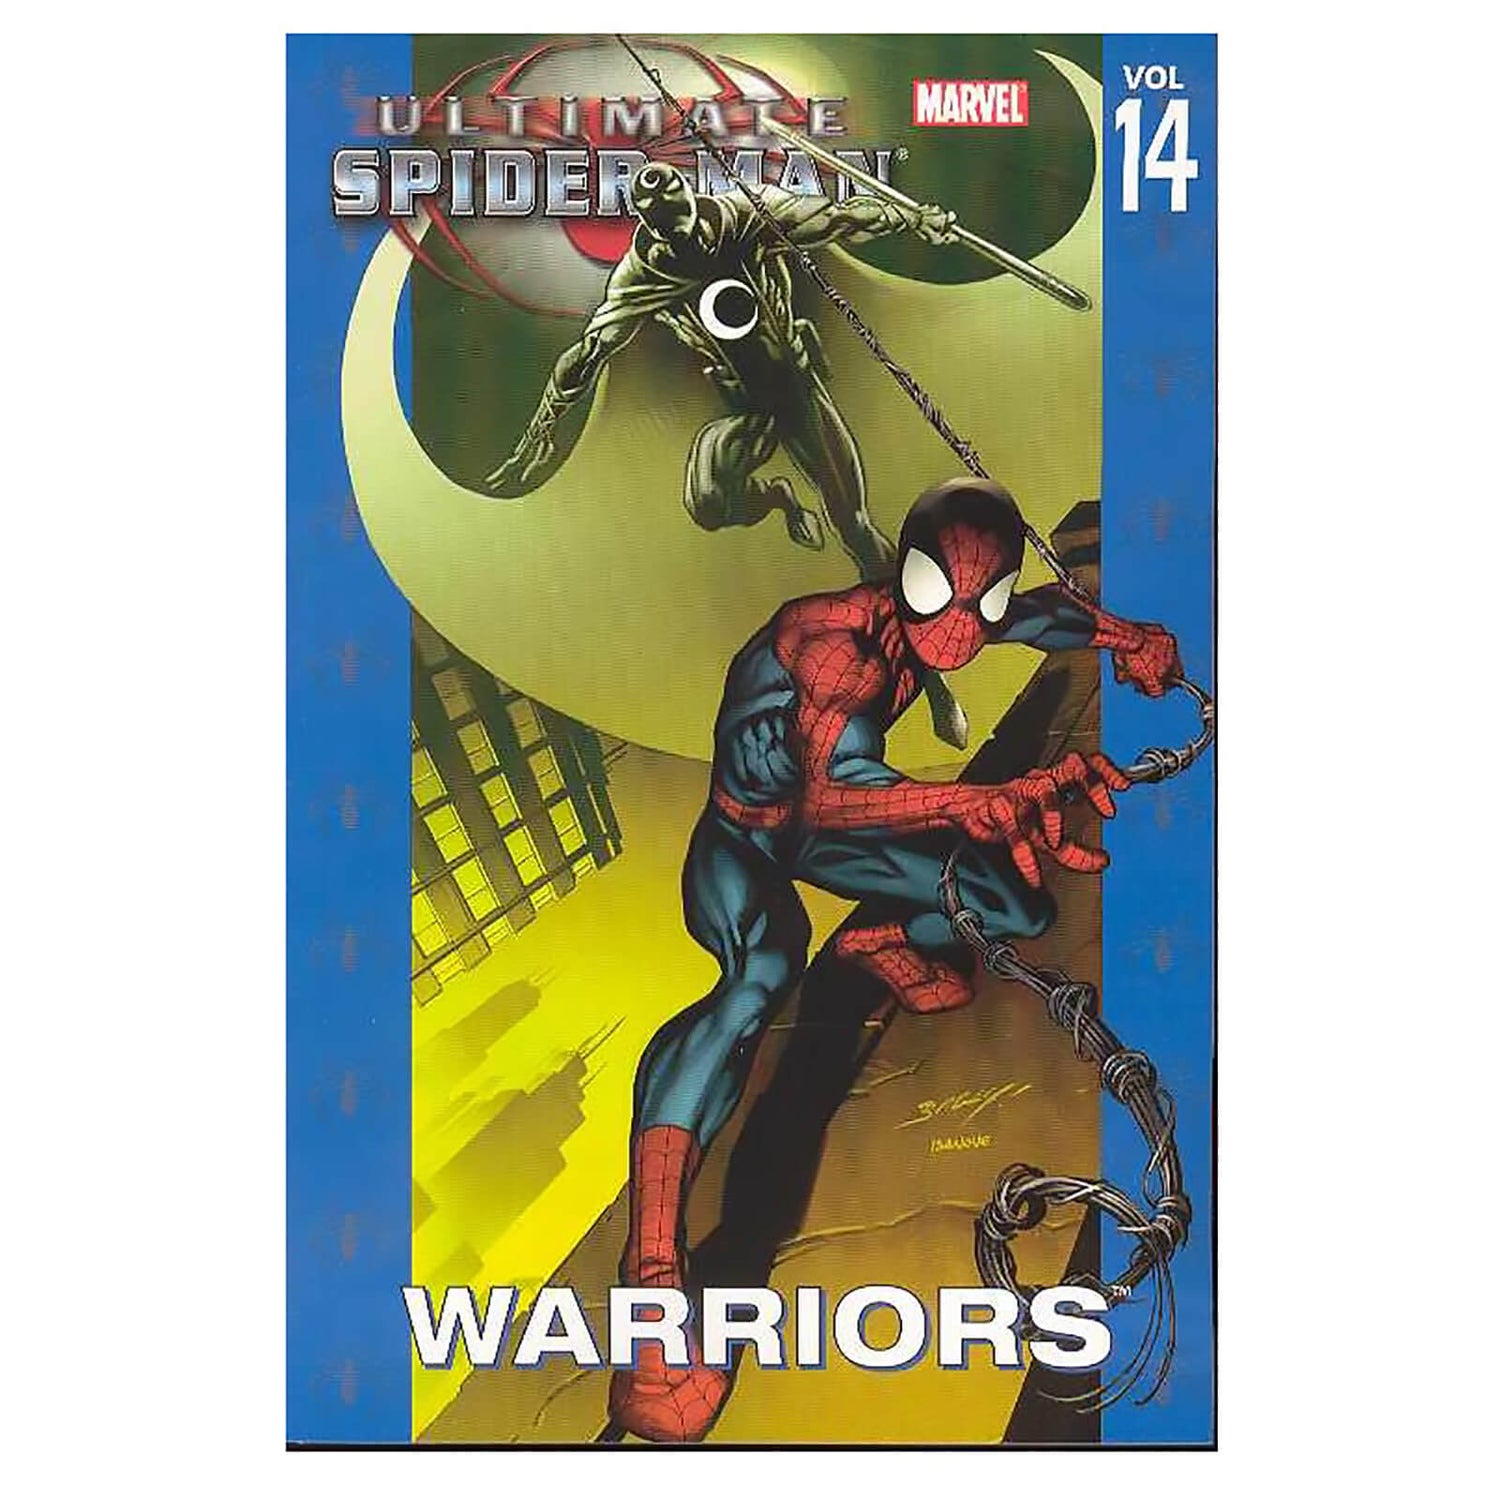 Marvel Comics Ultimate Spider-man Trade Paperback Vol 14 Warriors Graphic Novel